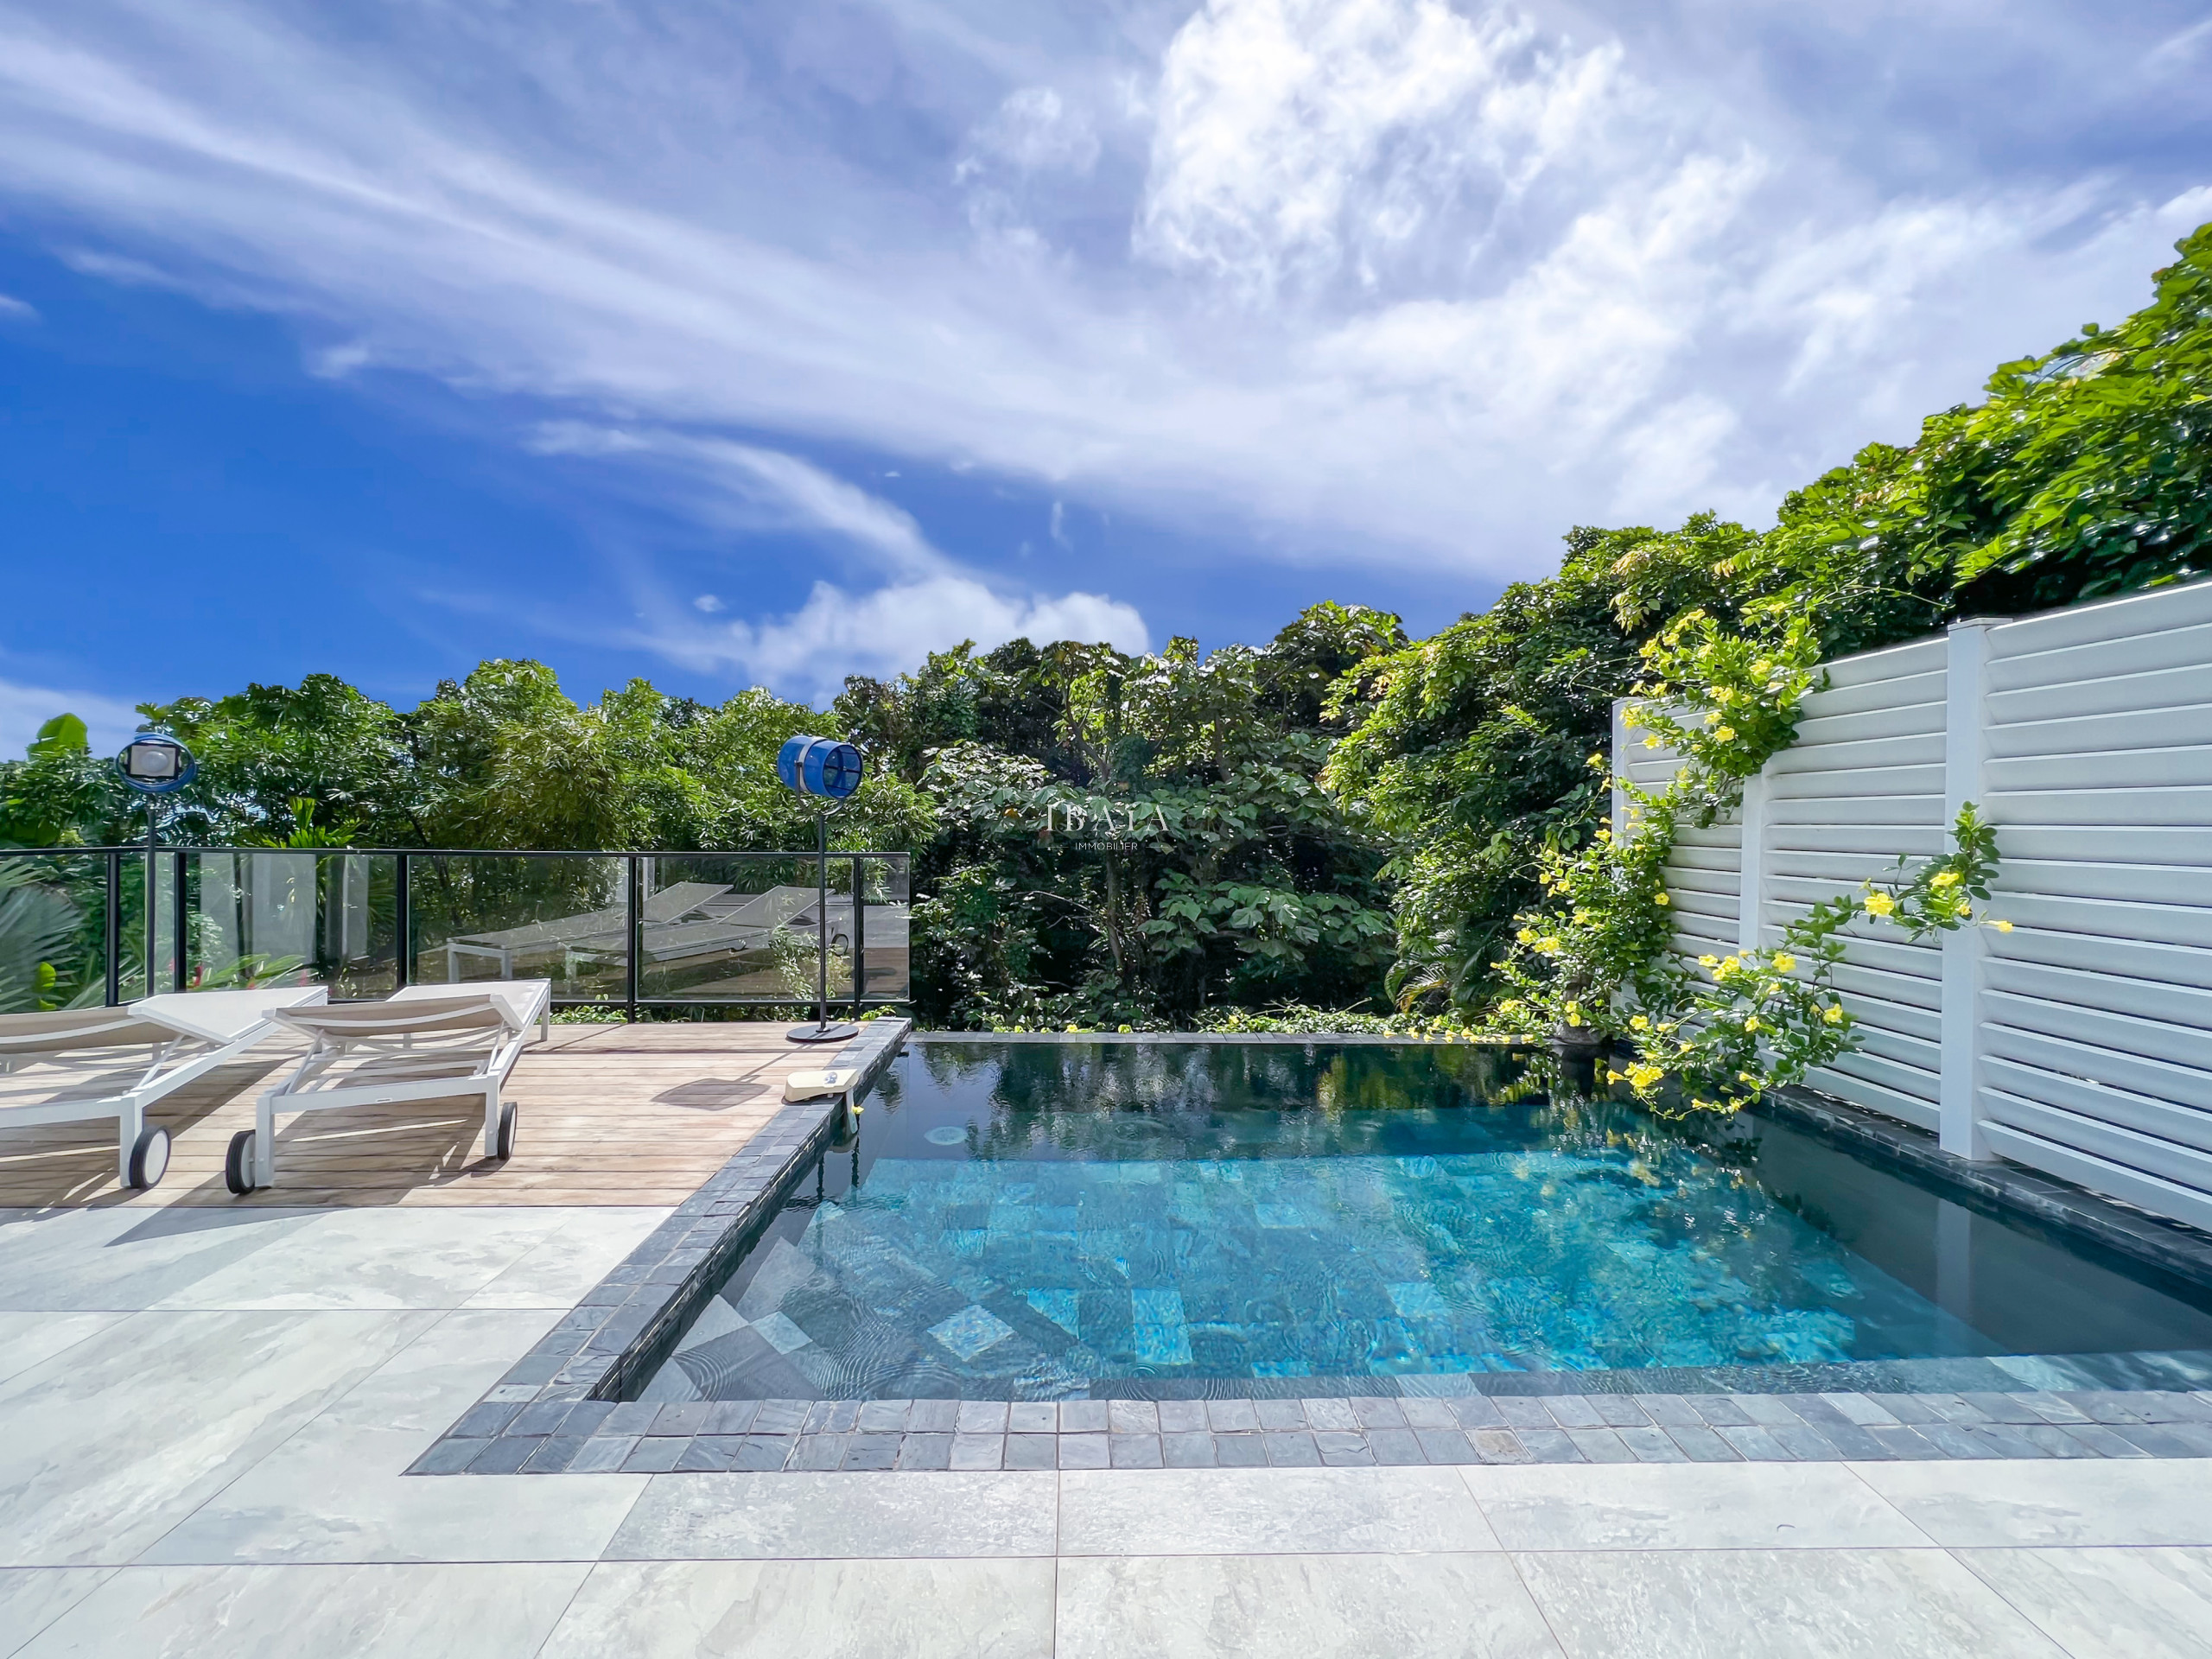 Splendide piscine à débordement s'inspirant du style de Bali